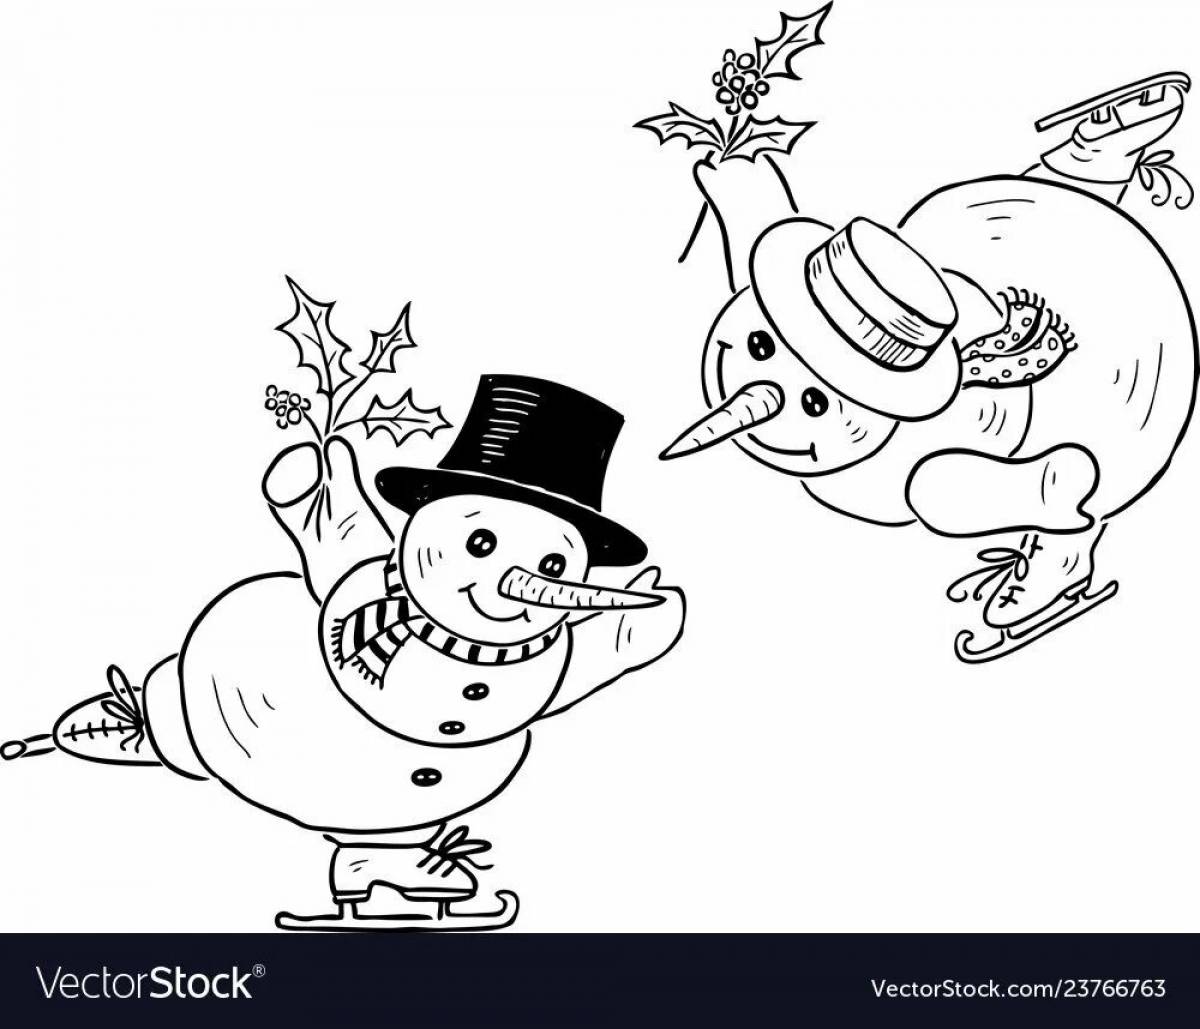 Снеговик на коньках #6